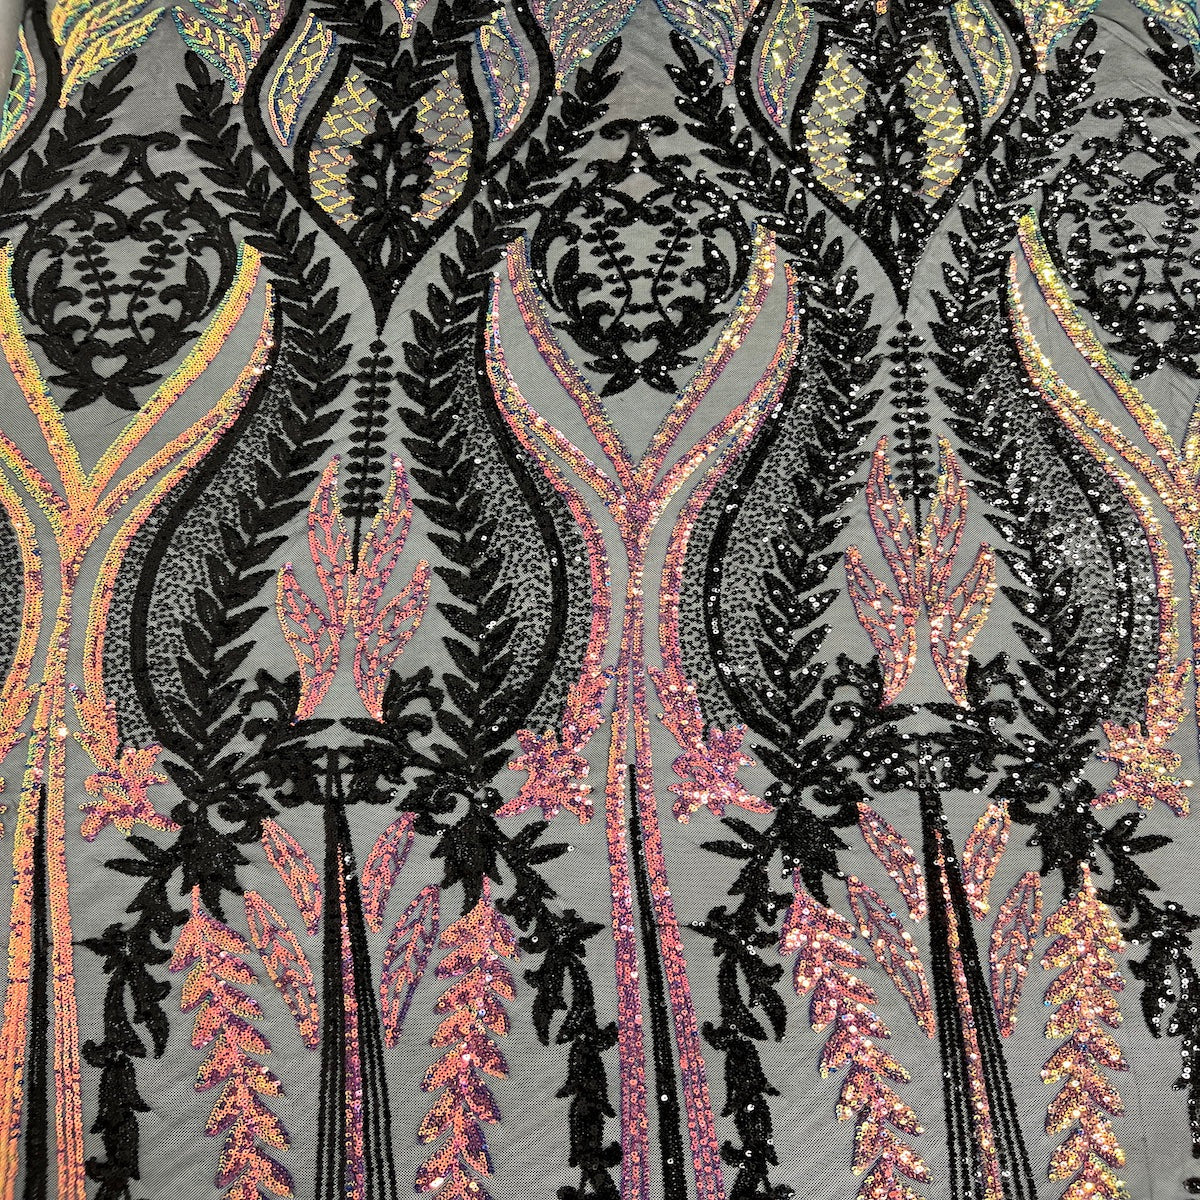 Arcoiris iridiscente | Tela de encaje de lentejuelas damasco Alina negra